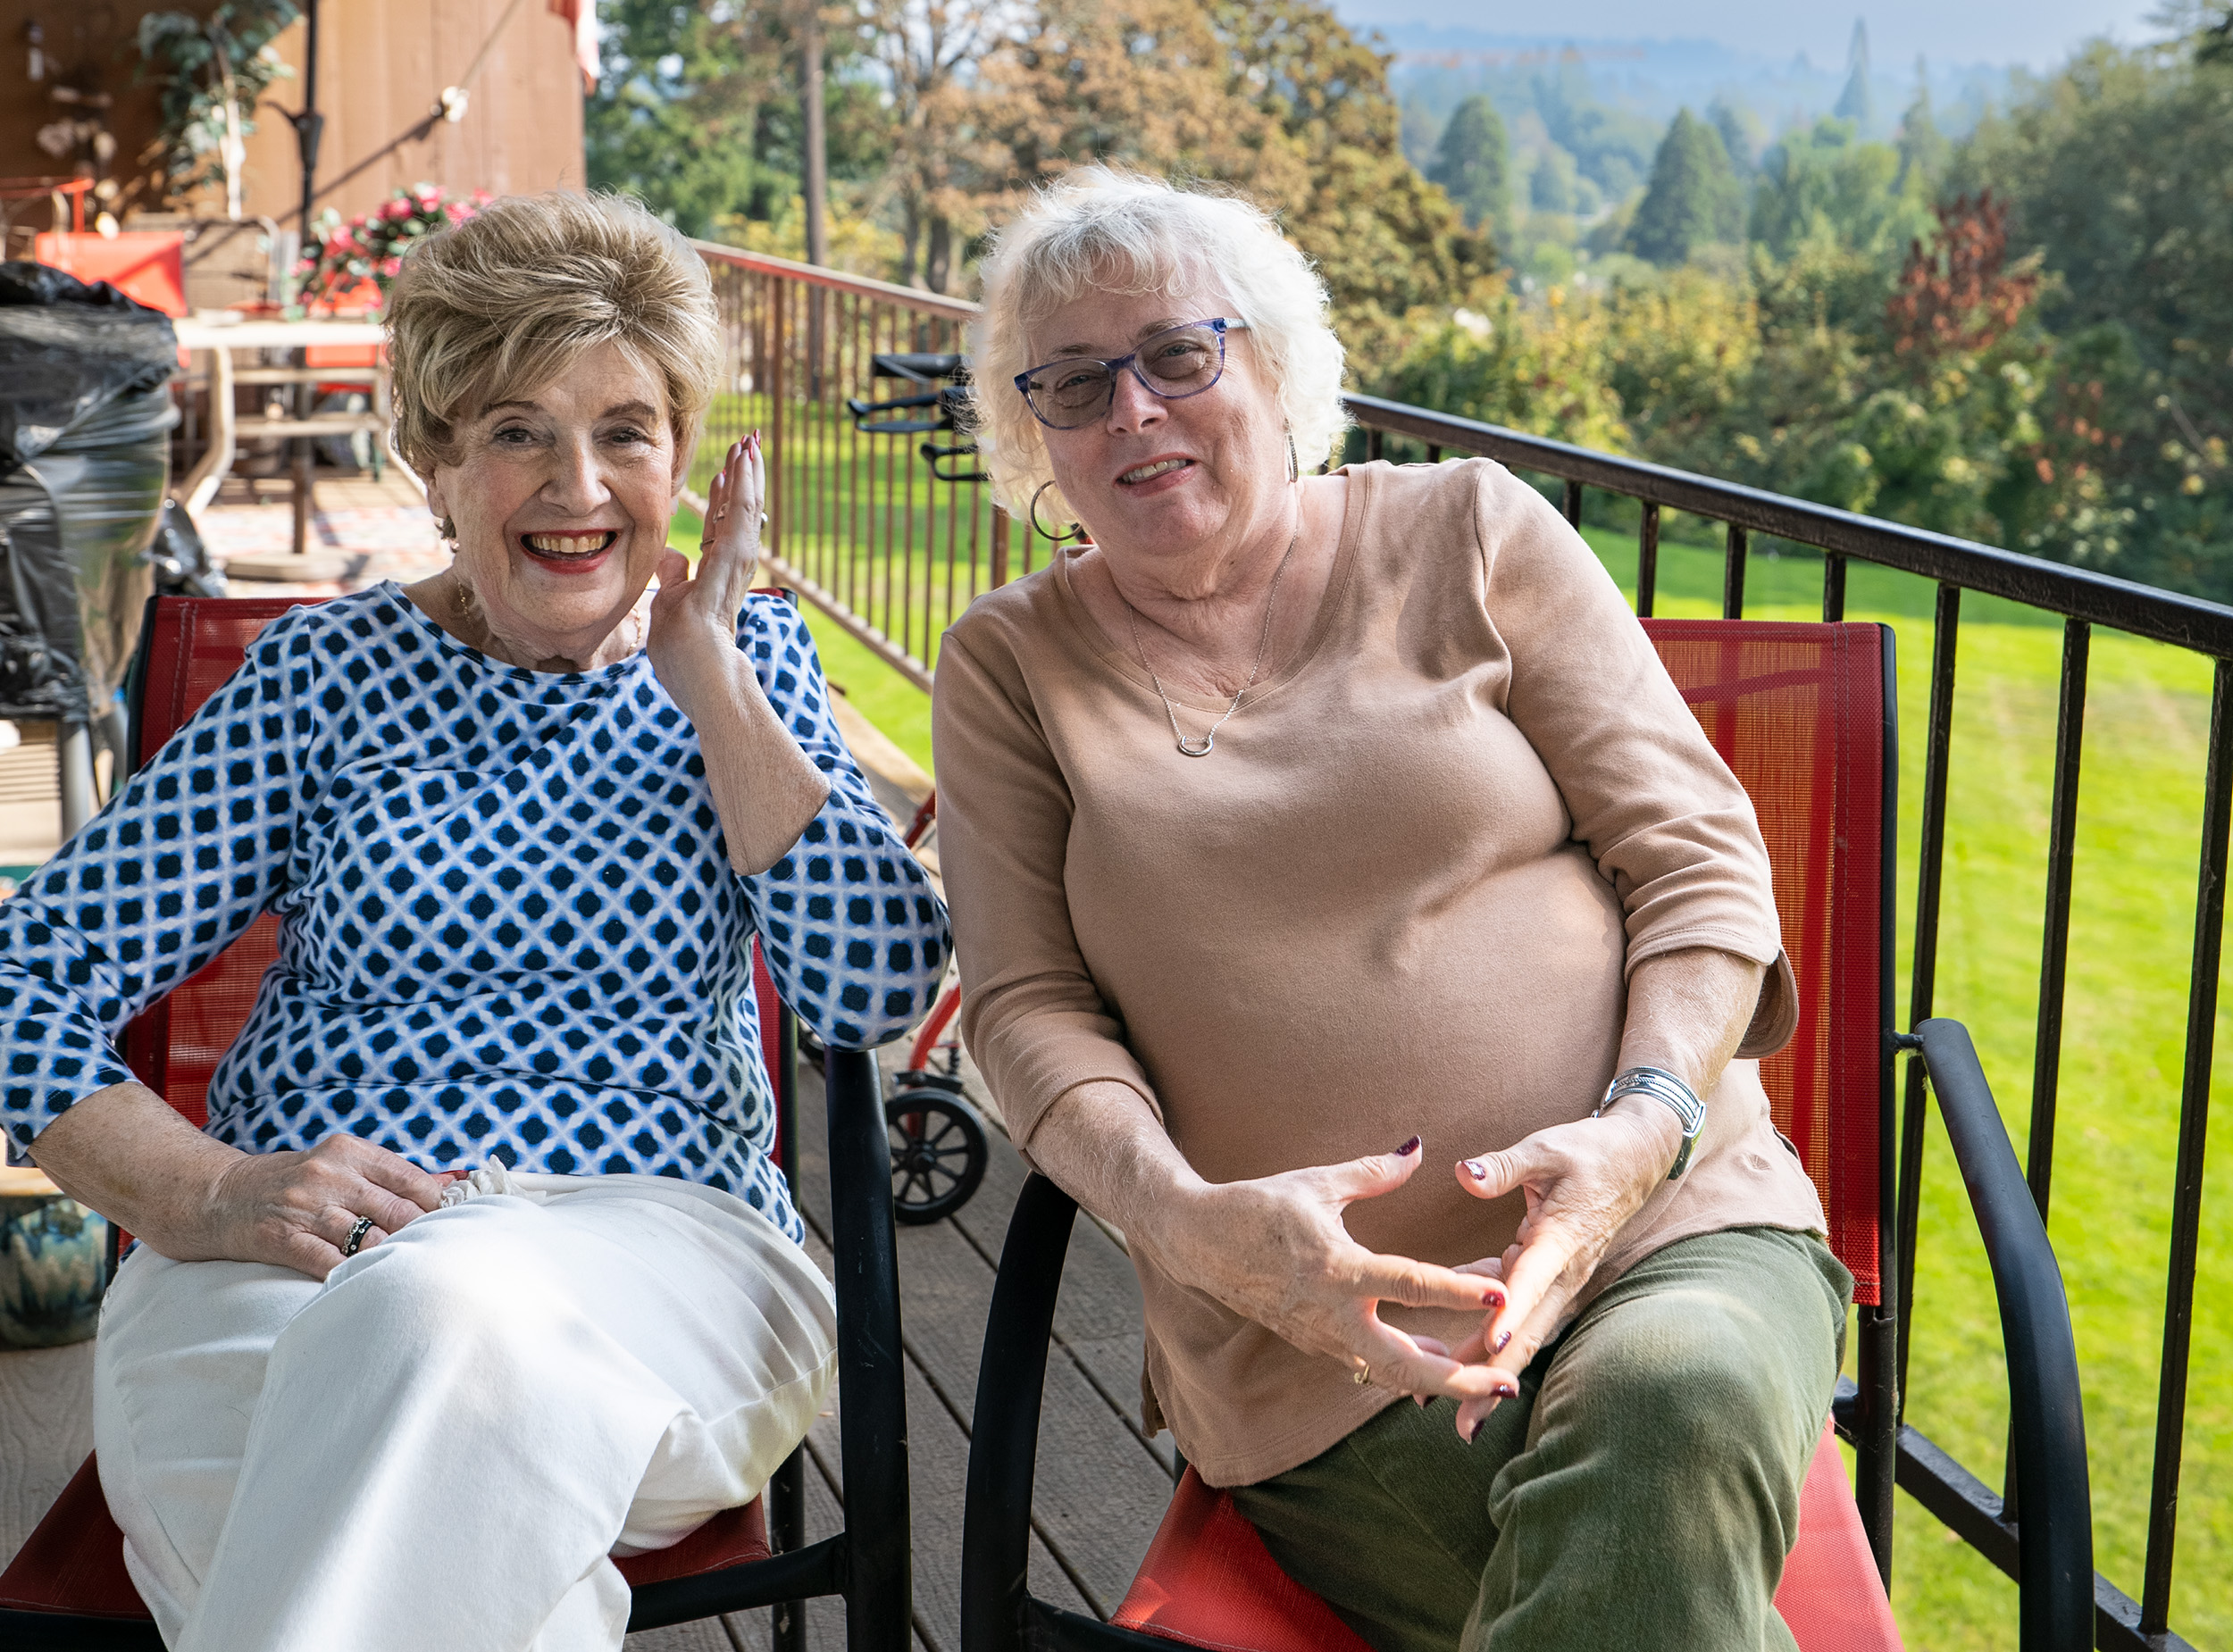 Senior Companion Program volunteer Ellen Morgan (right) provides companionship and reading support to client Trevalee Johansson.